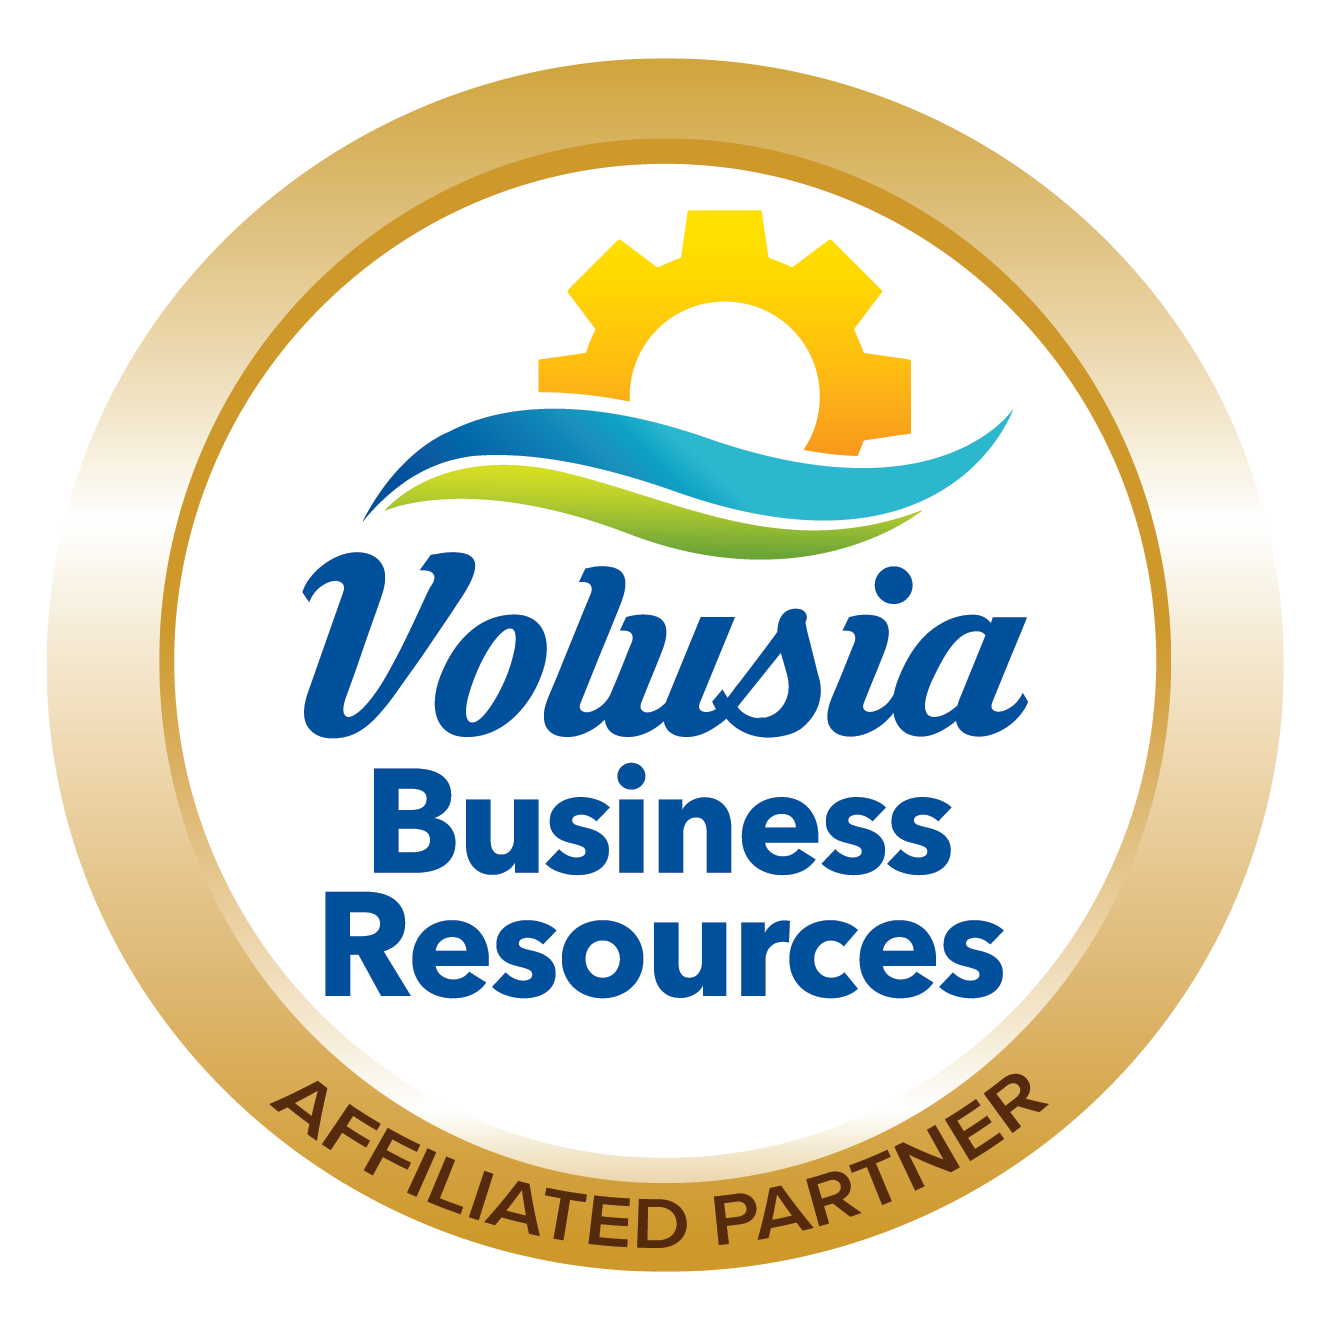 Volusia Business Resources Affiliated Partner logo.